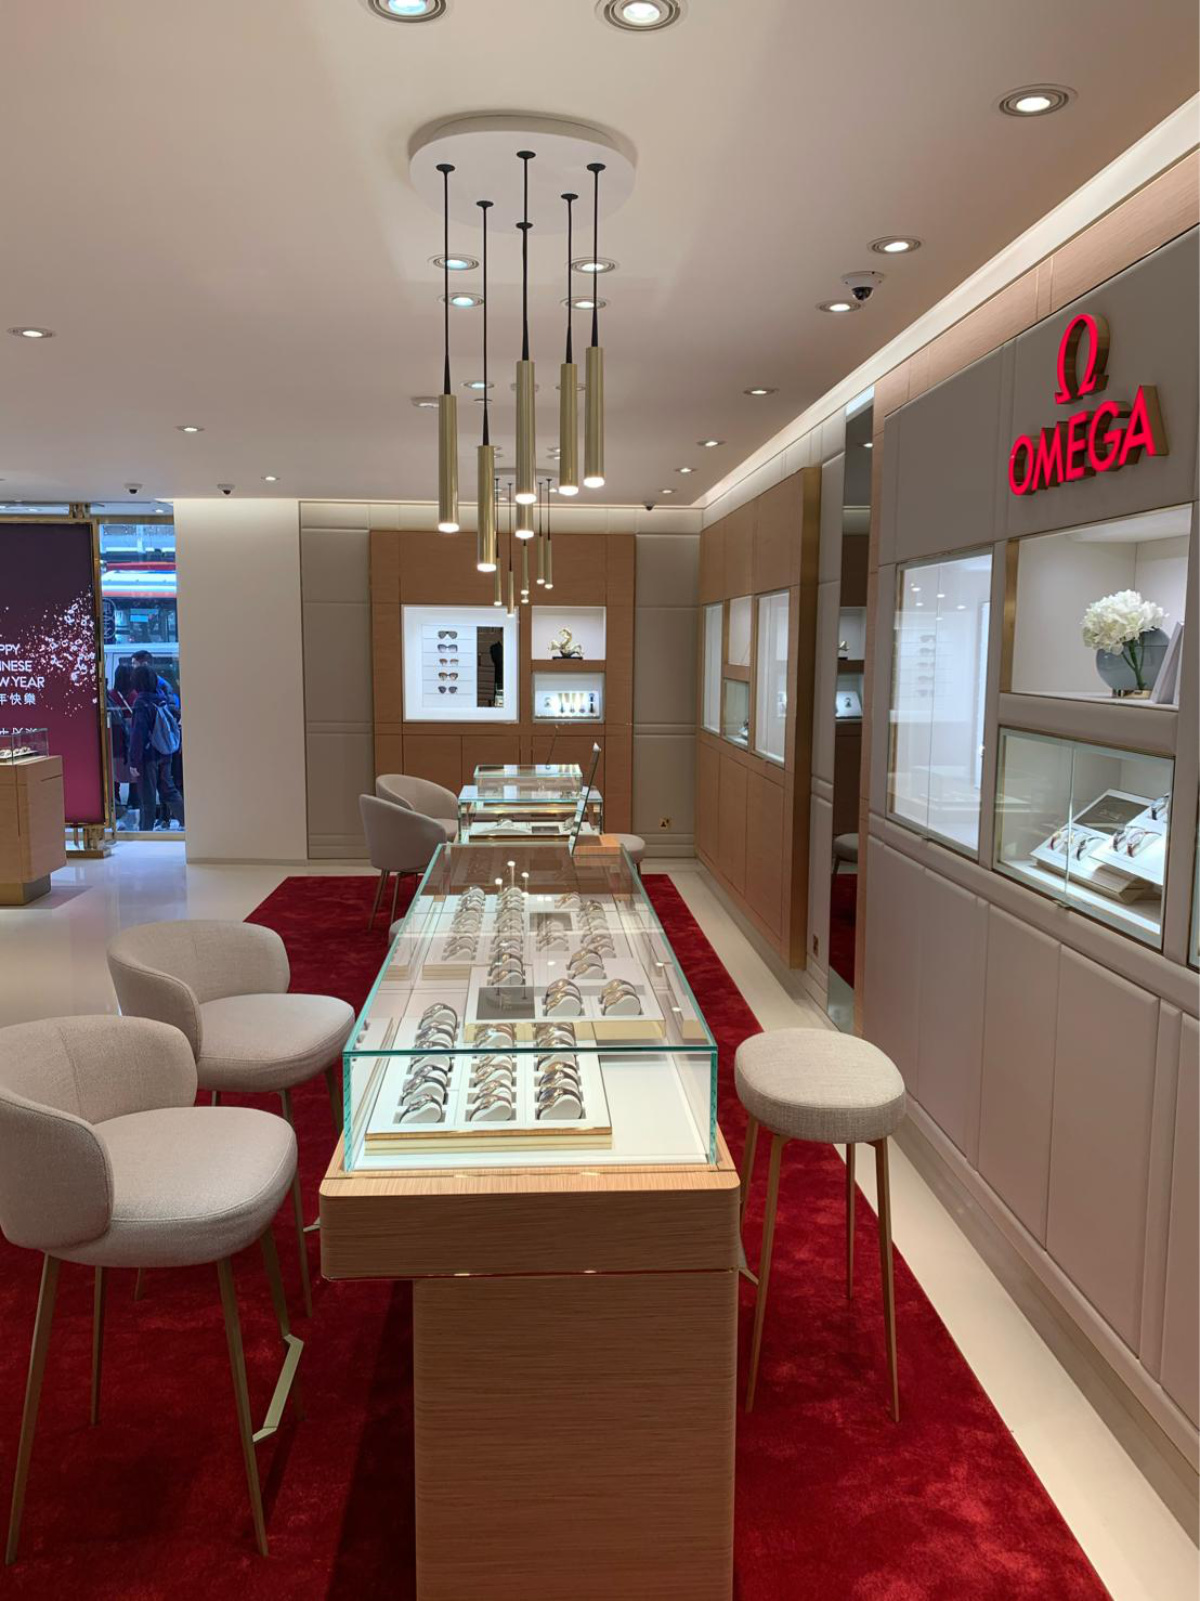 OMEGA reopens Macau Square flagship